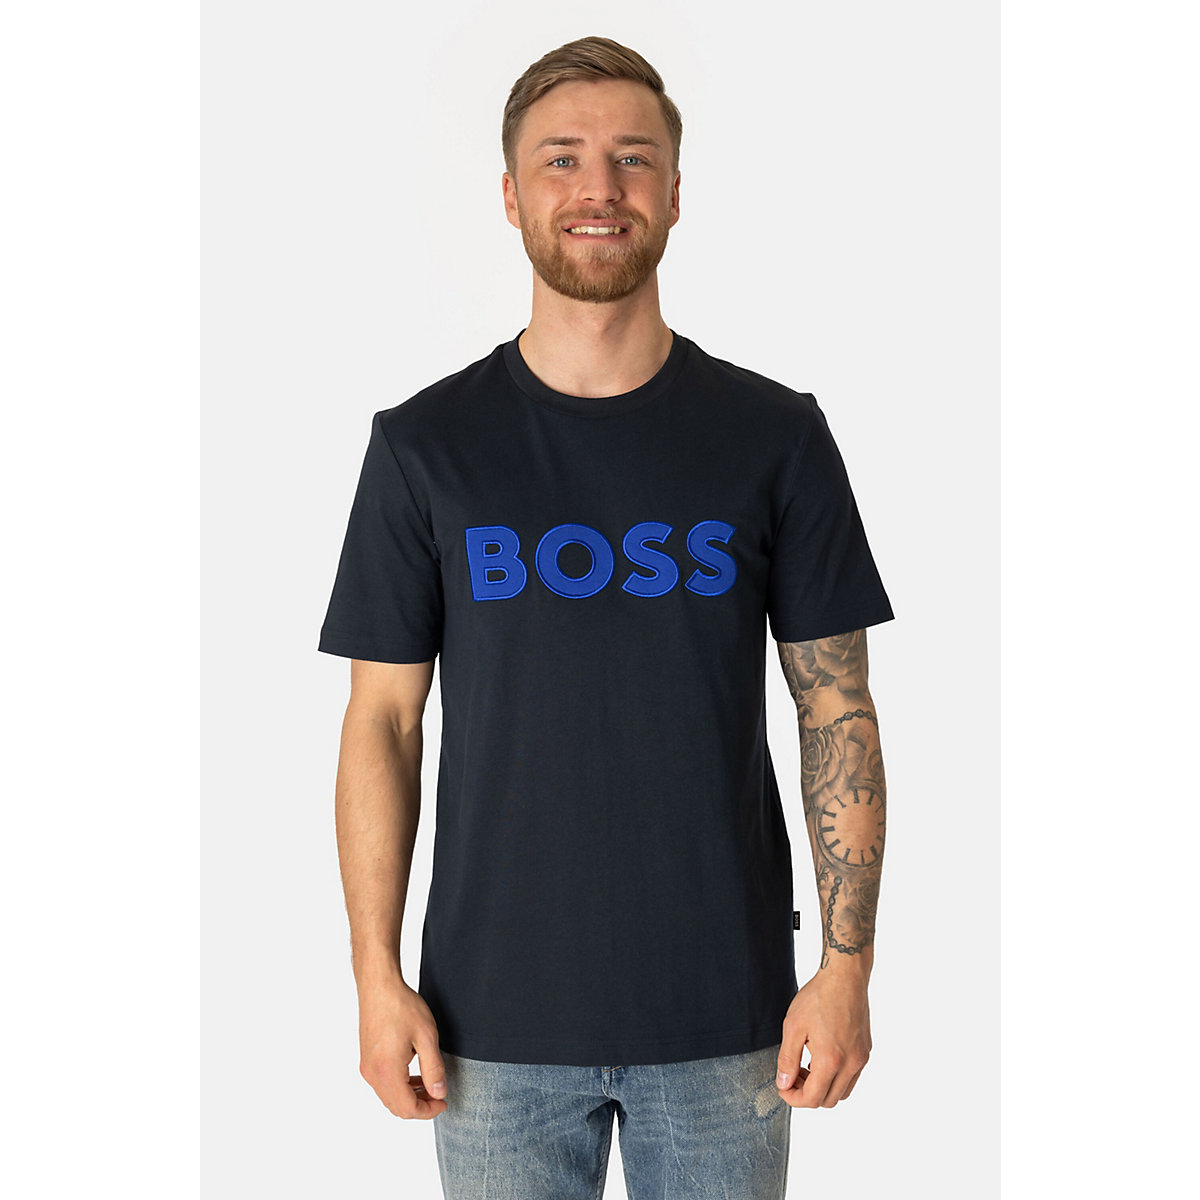 BOSS T-Shirt Tiburt schwarz/blau